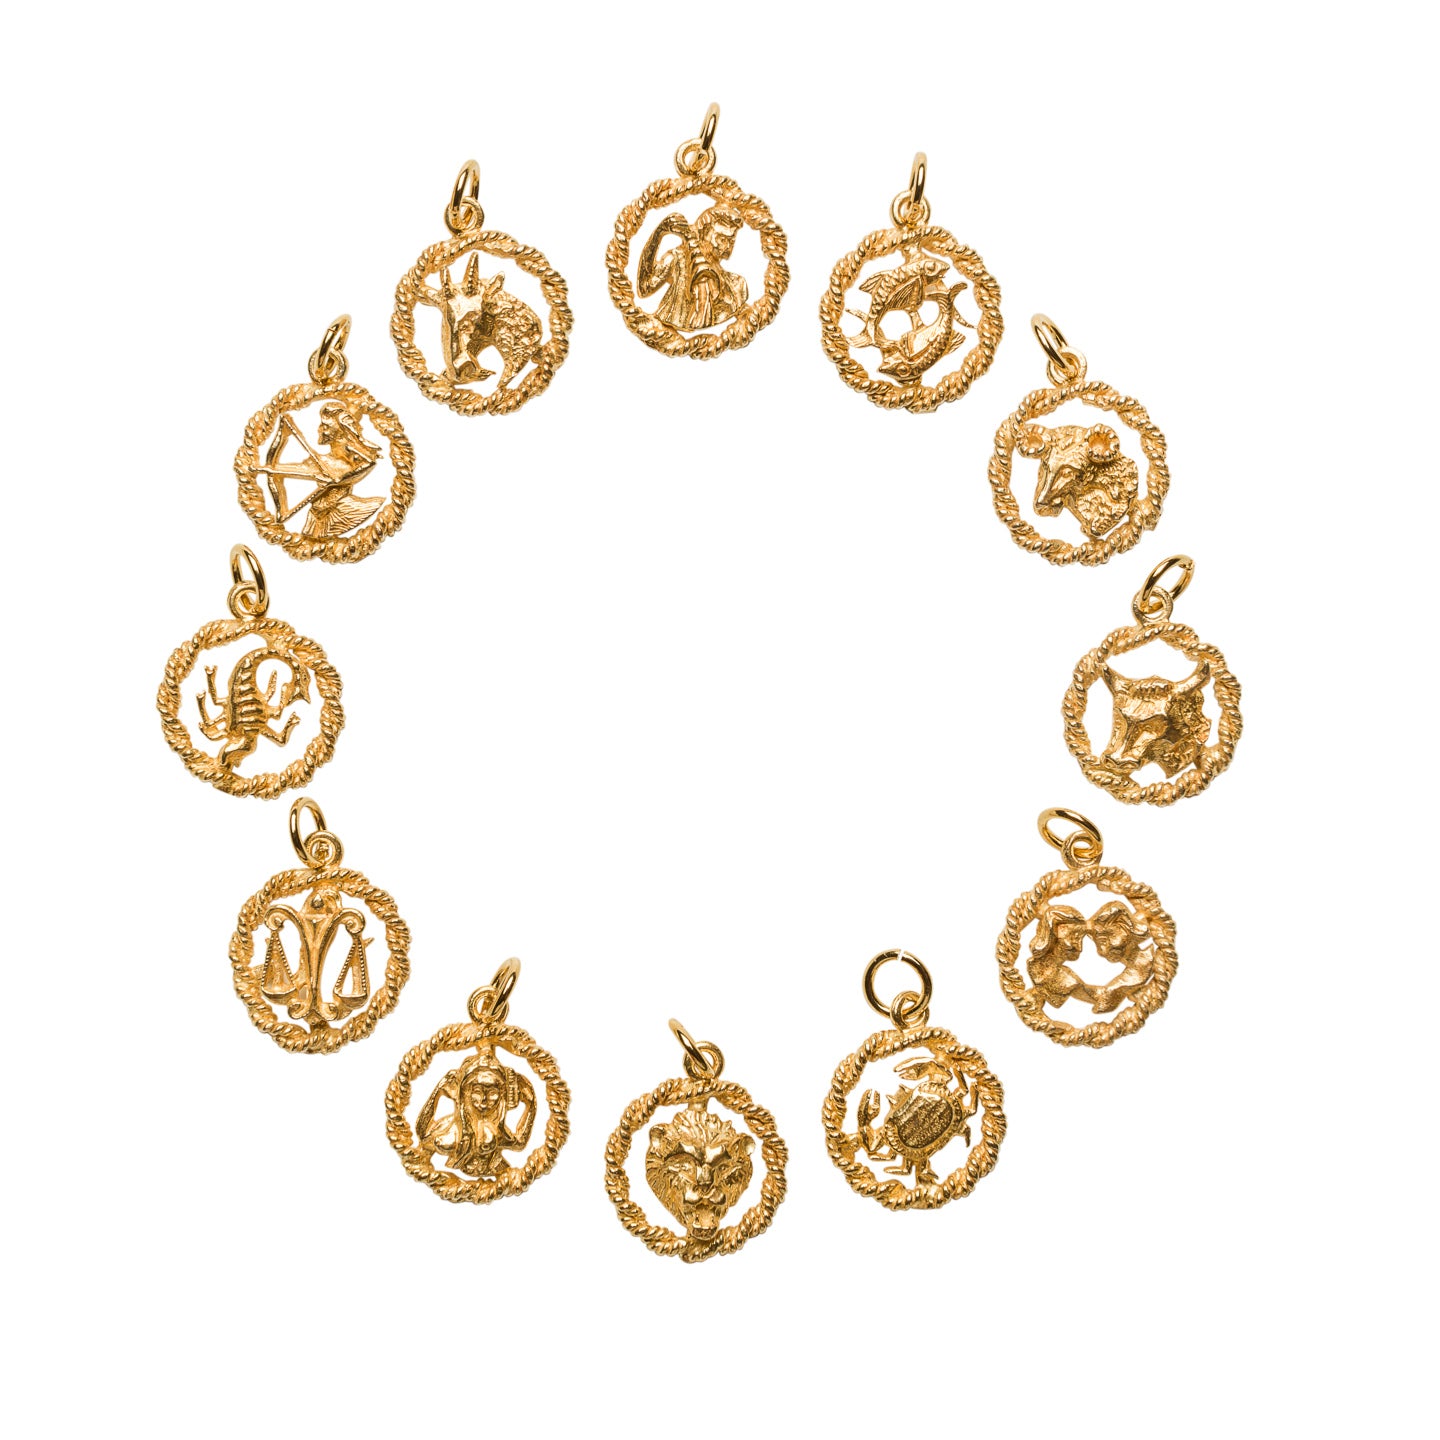 Zodiac Medal British Made - Mirabelle Jewellery